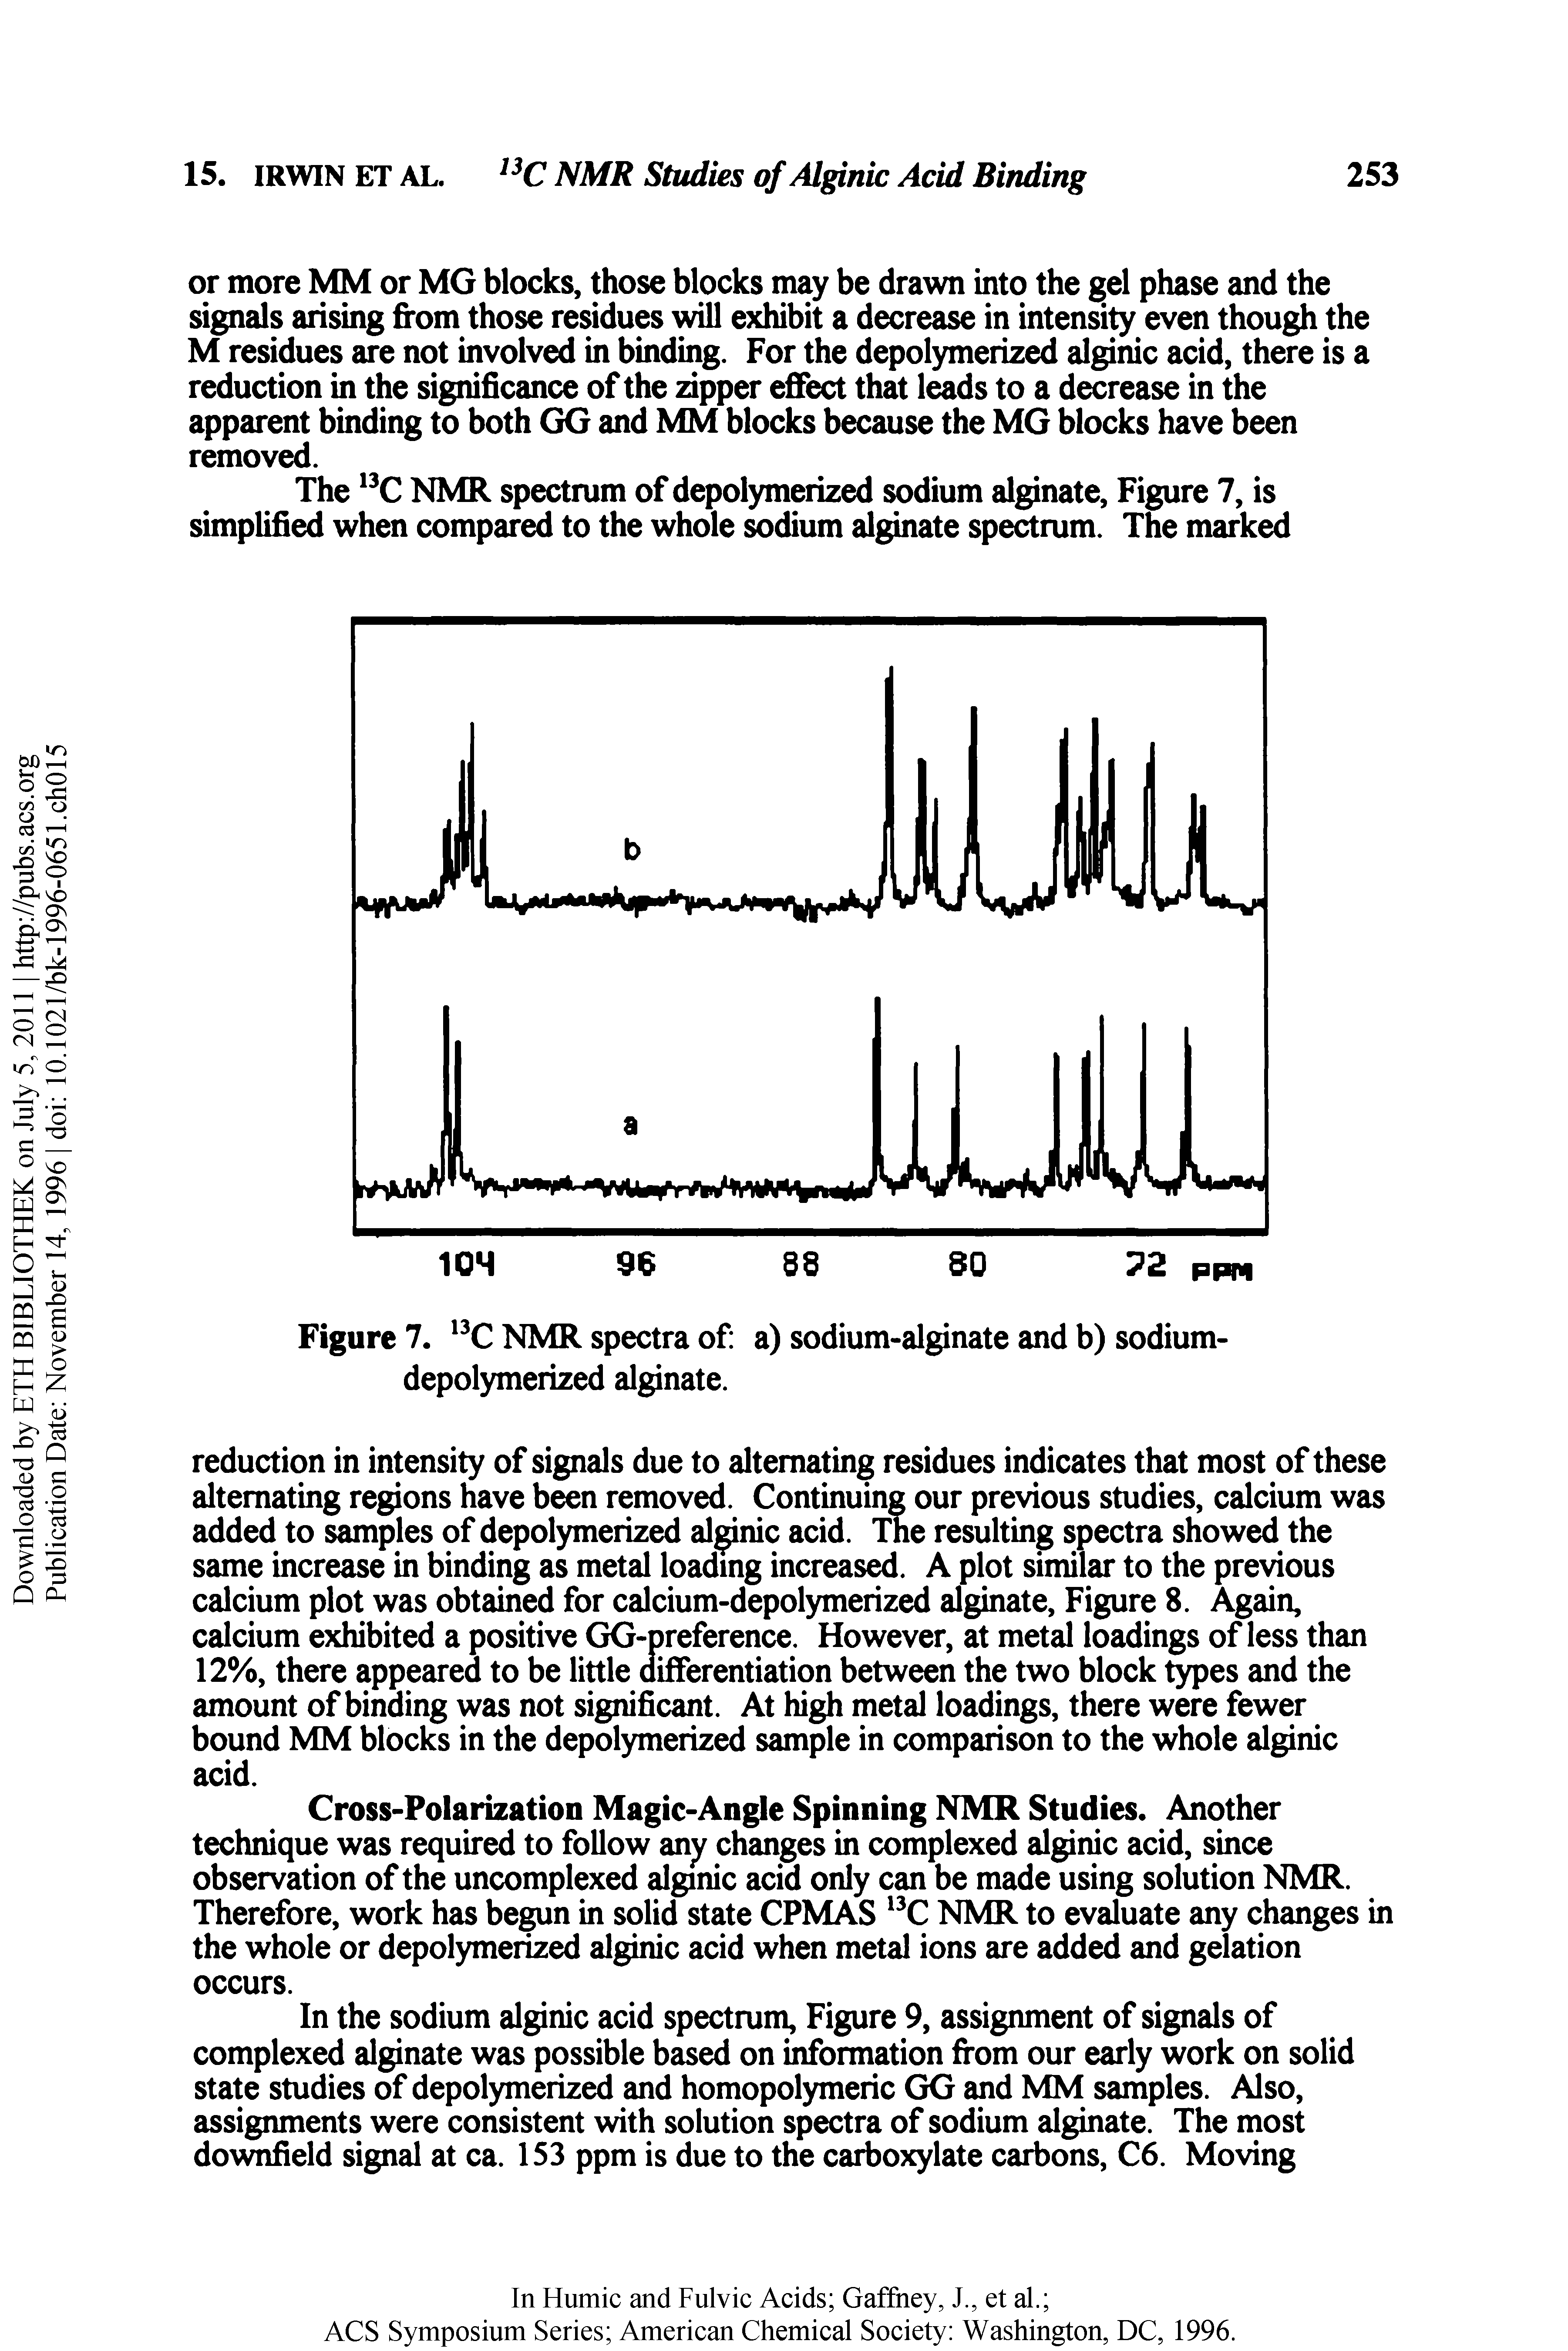 Figure 7. NMR spectra of a) sodium-alginate and b) sodium-depolymerized alginate.